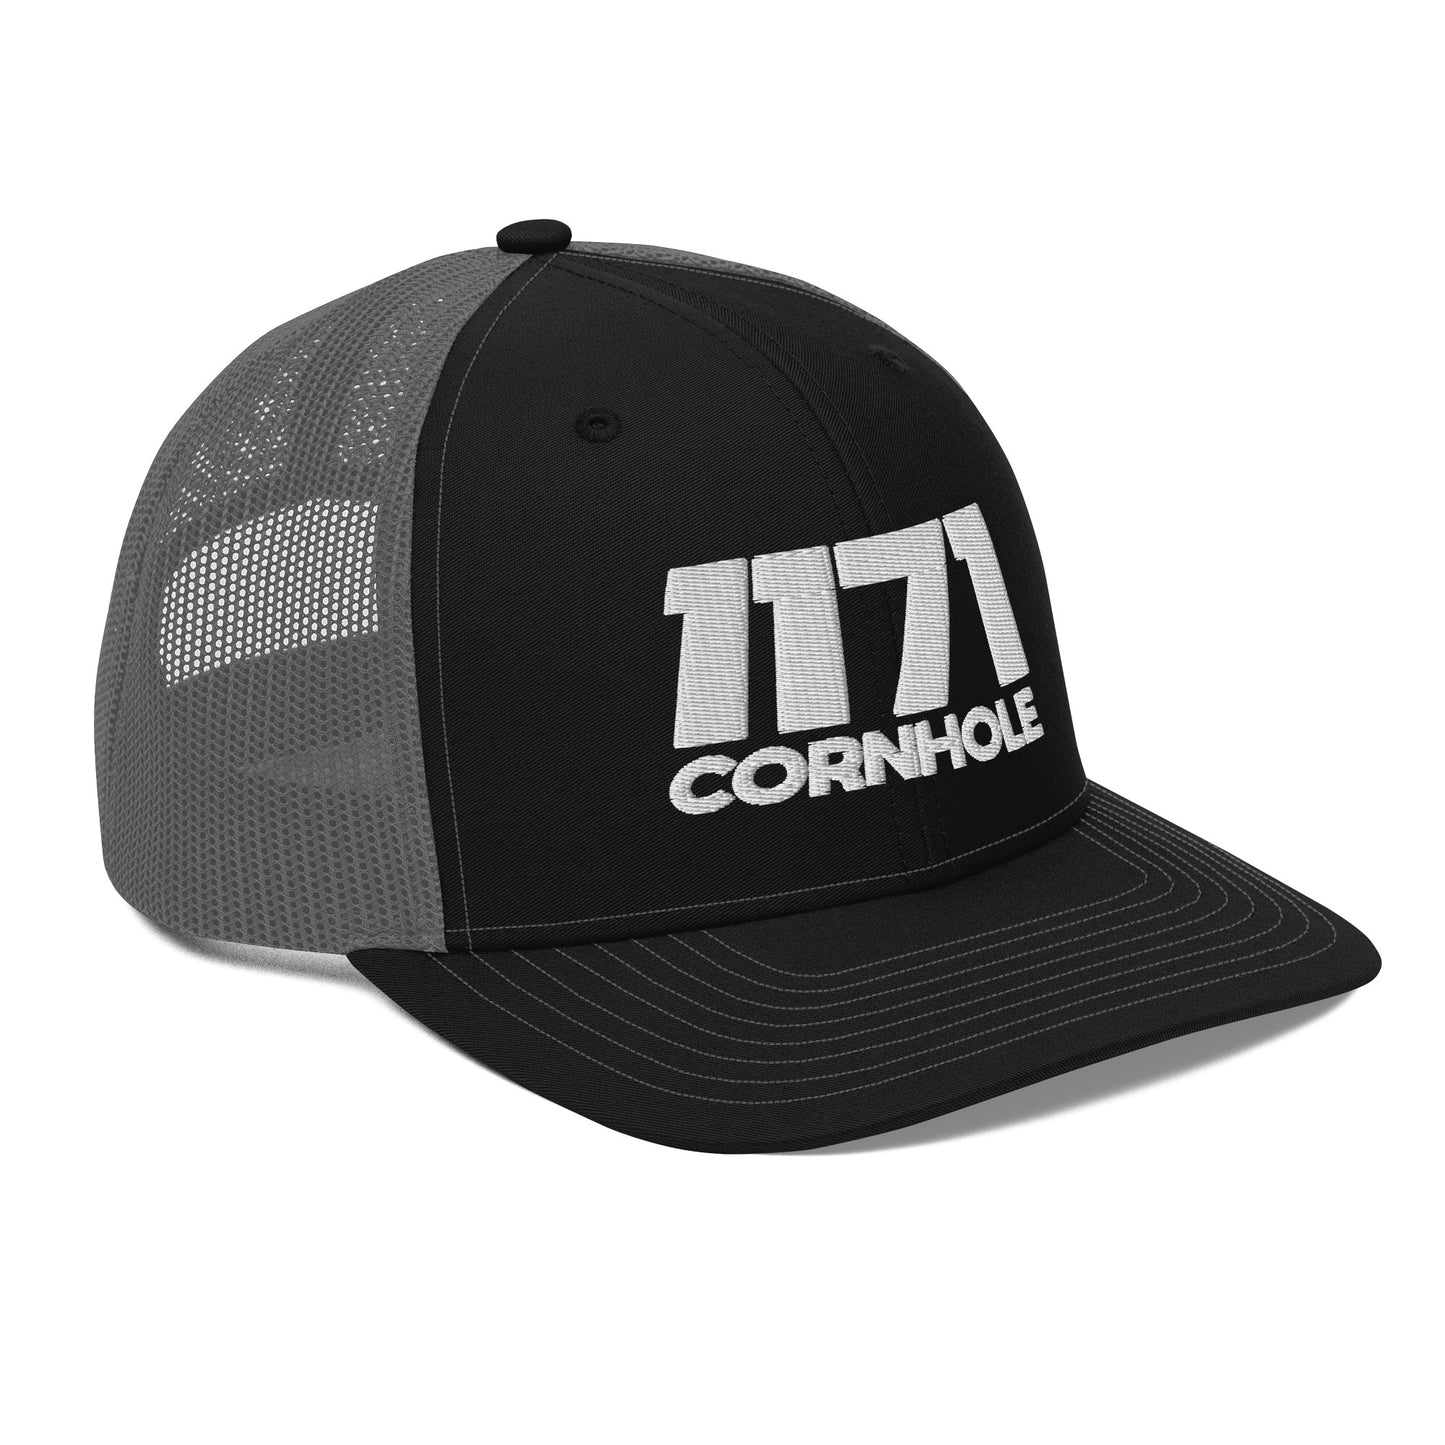 1171 Cornhole Embroidered Hat